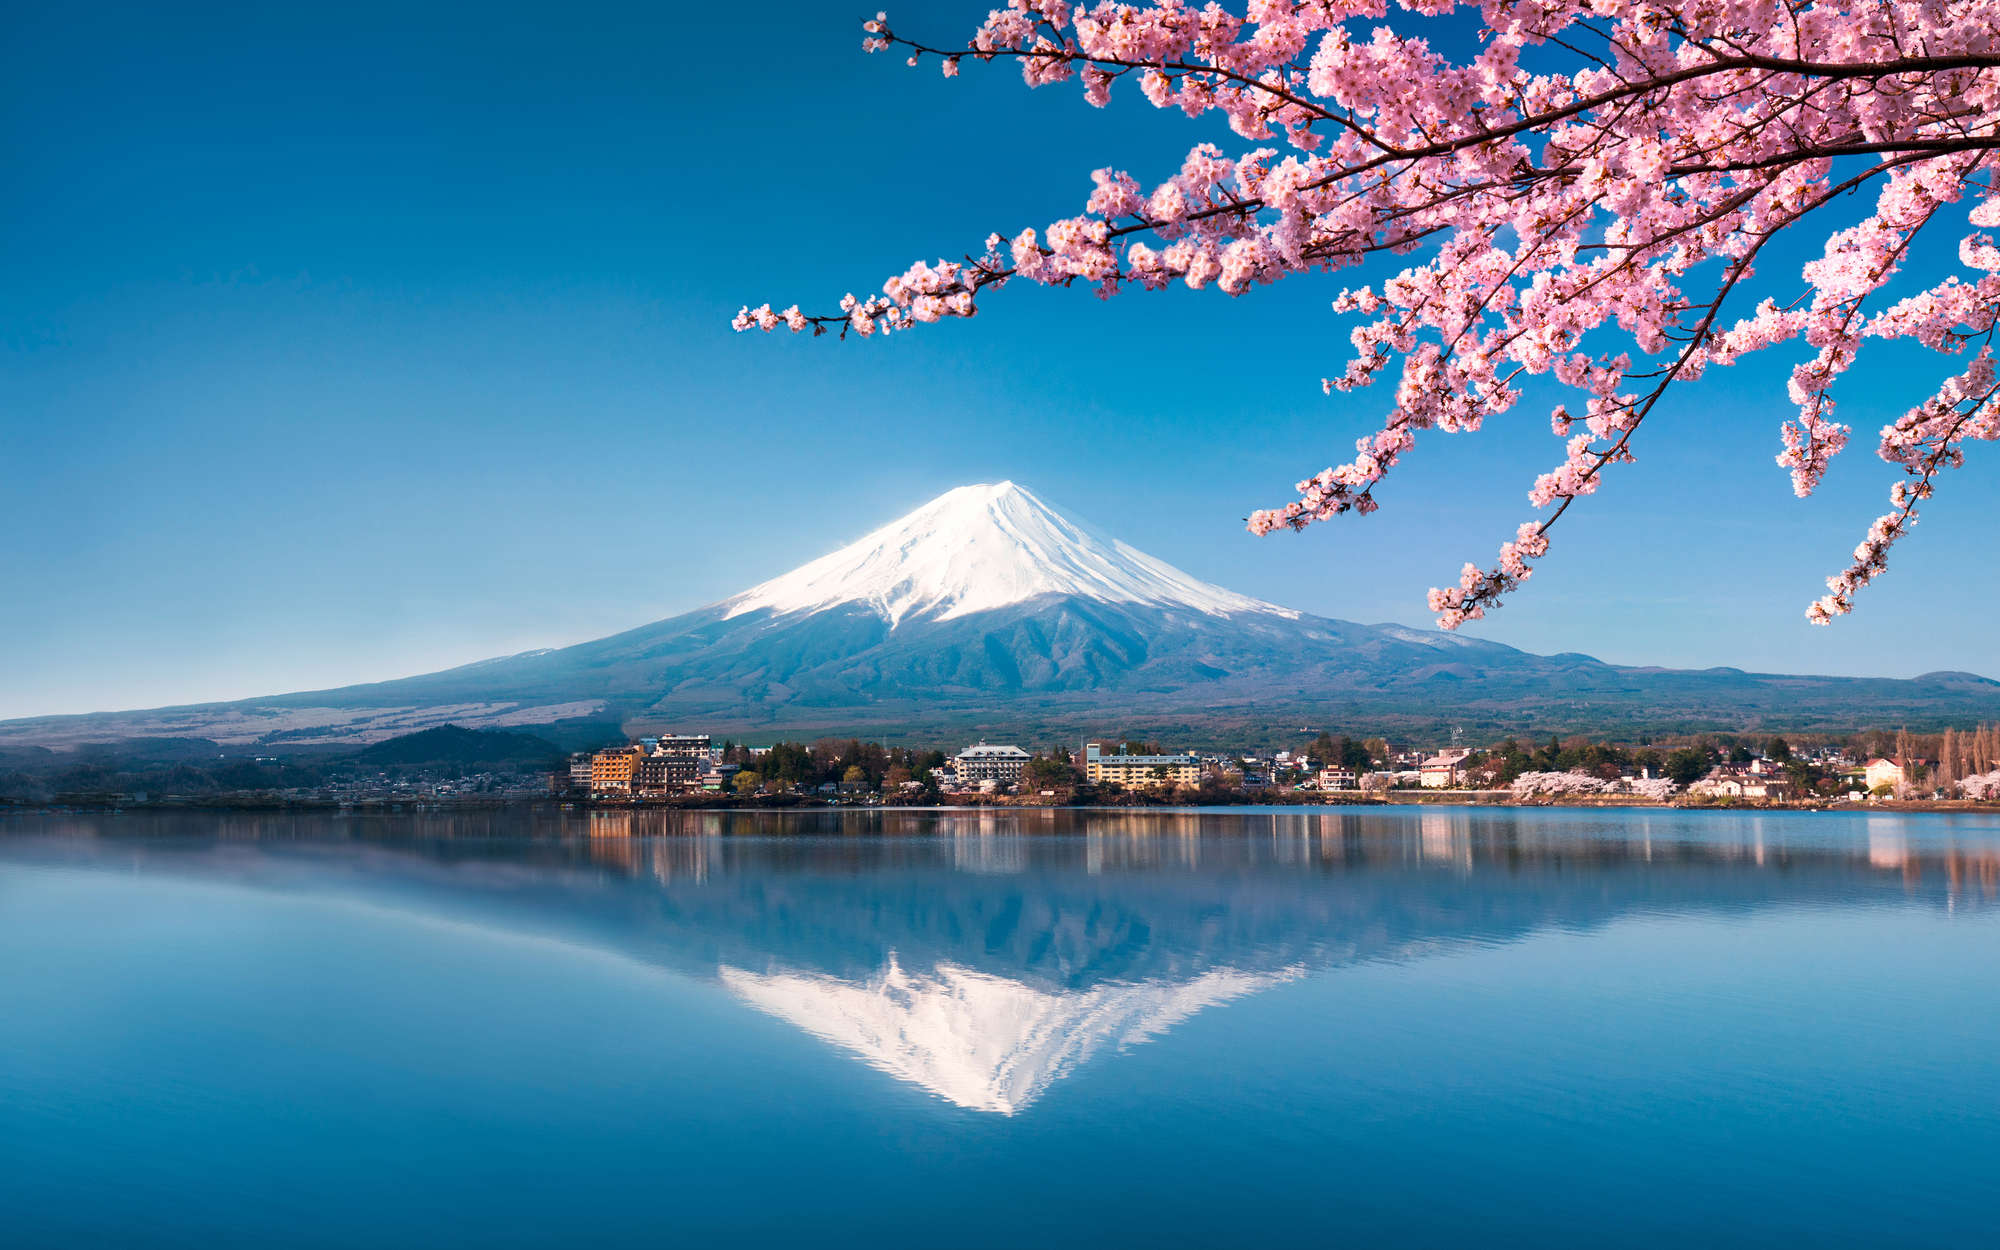             Photo wallpaper Fuji Volcano in Japan - Matt smooth fleece
        